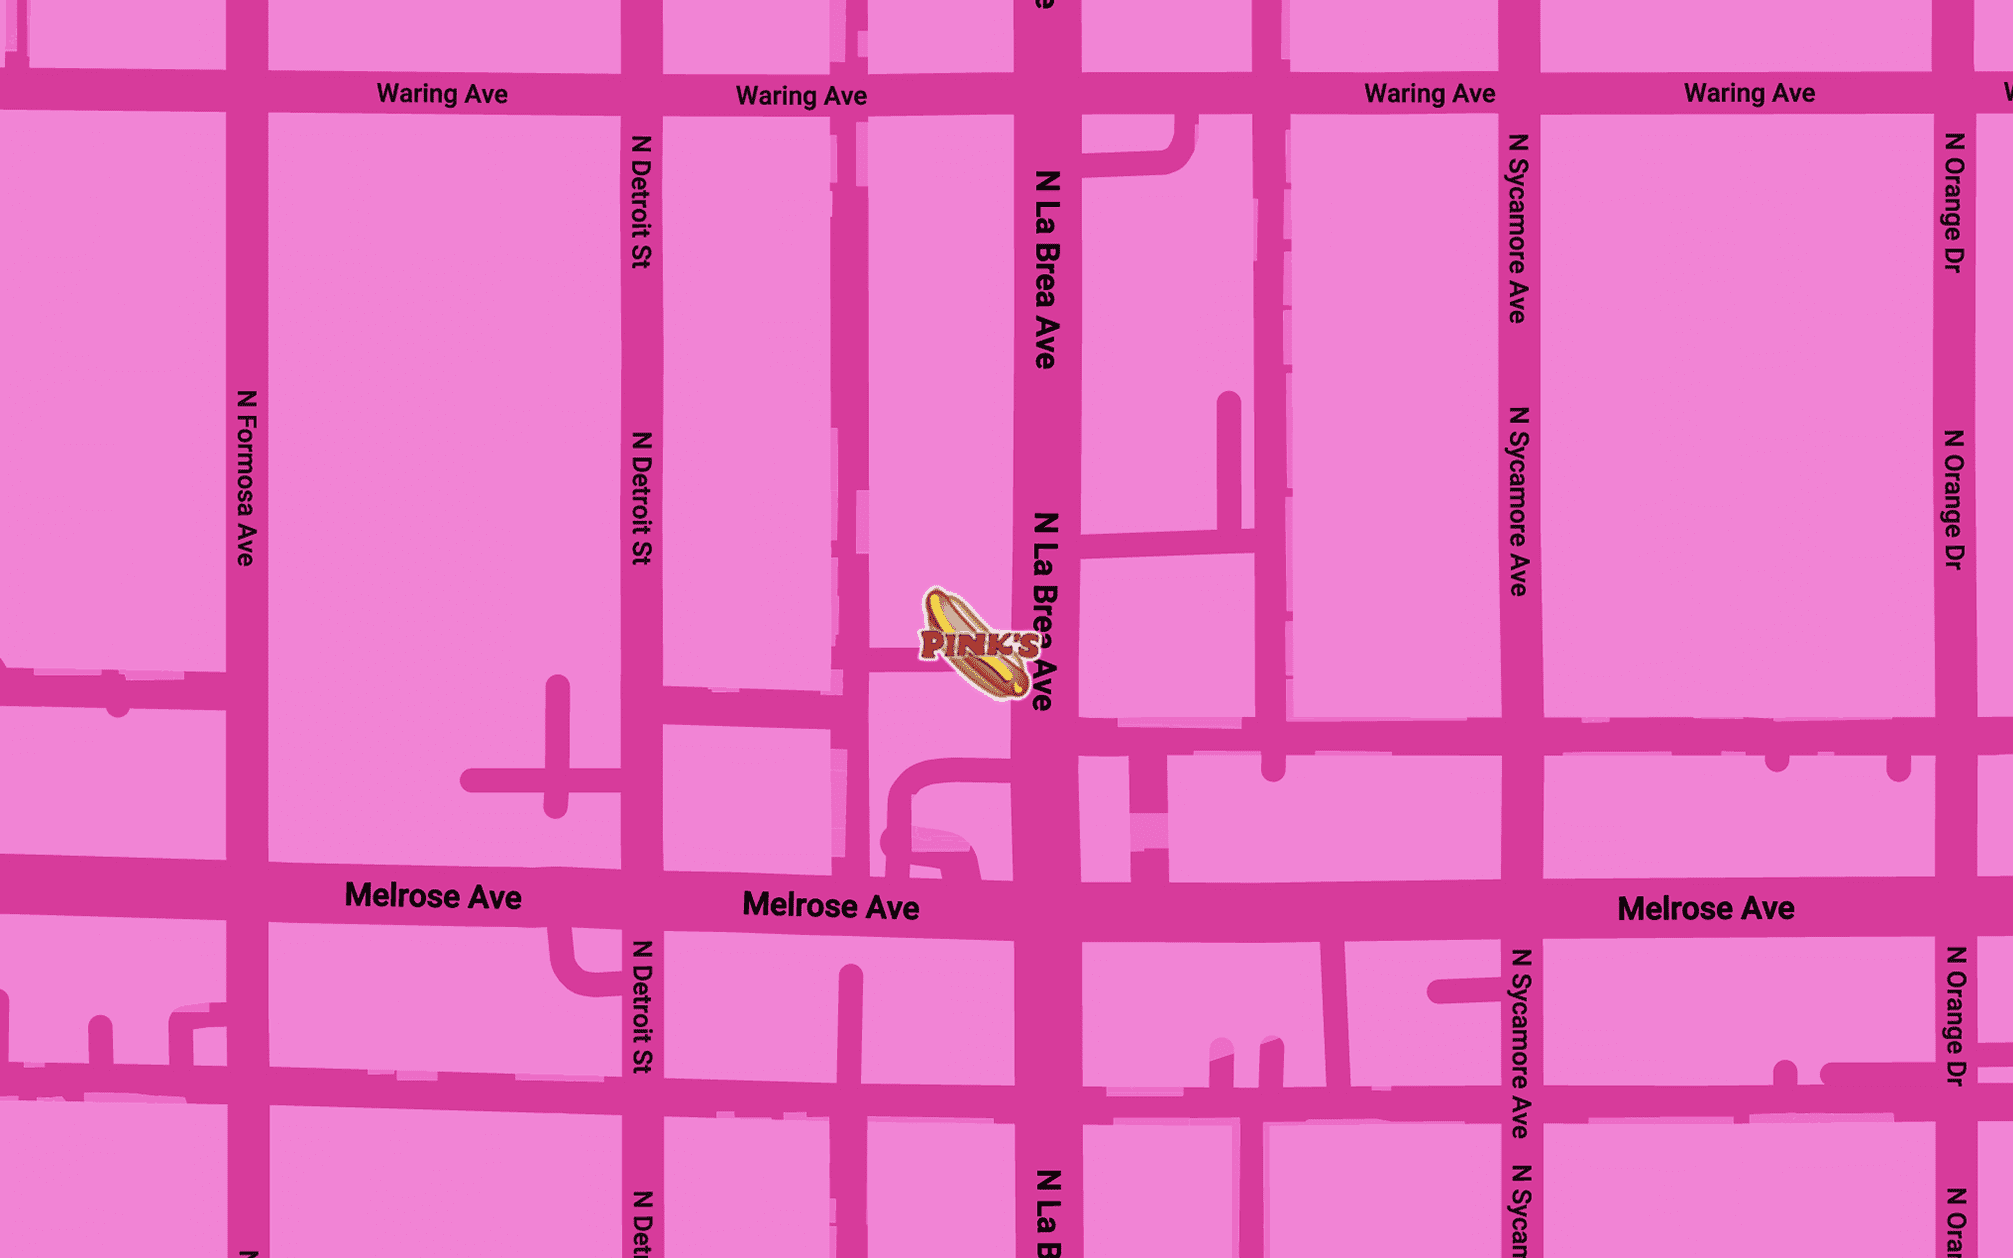 Map showing pink's location near the corner of North La Brea Avenue and Melrose Avenue in Los Angles, California.